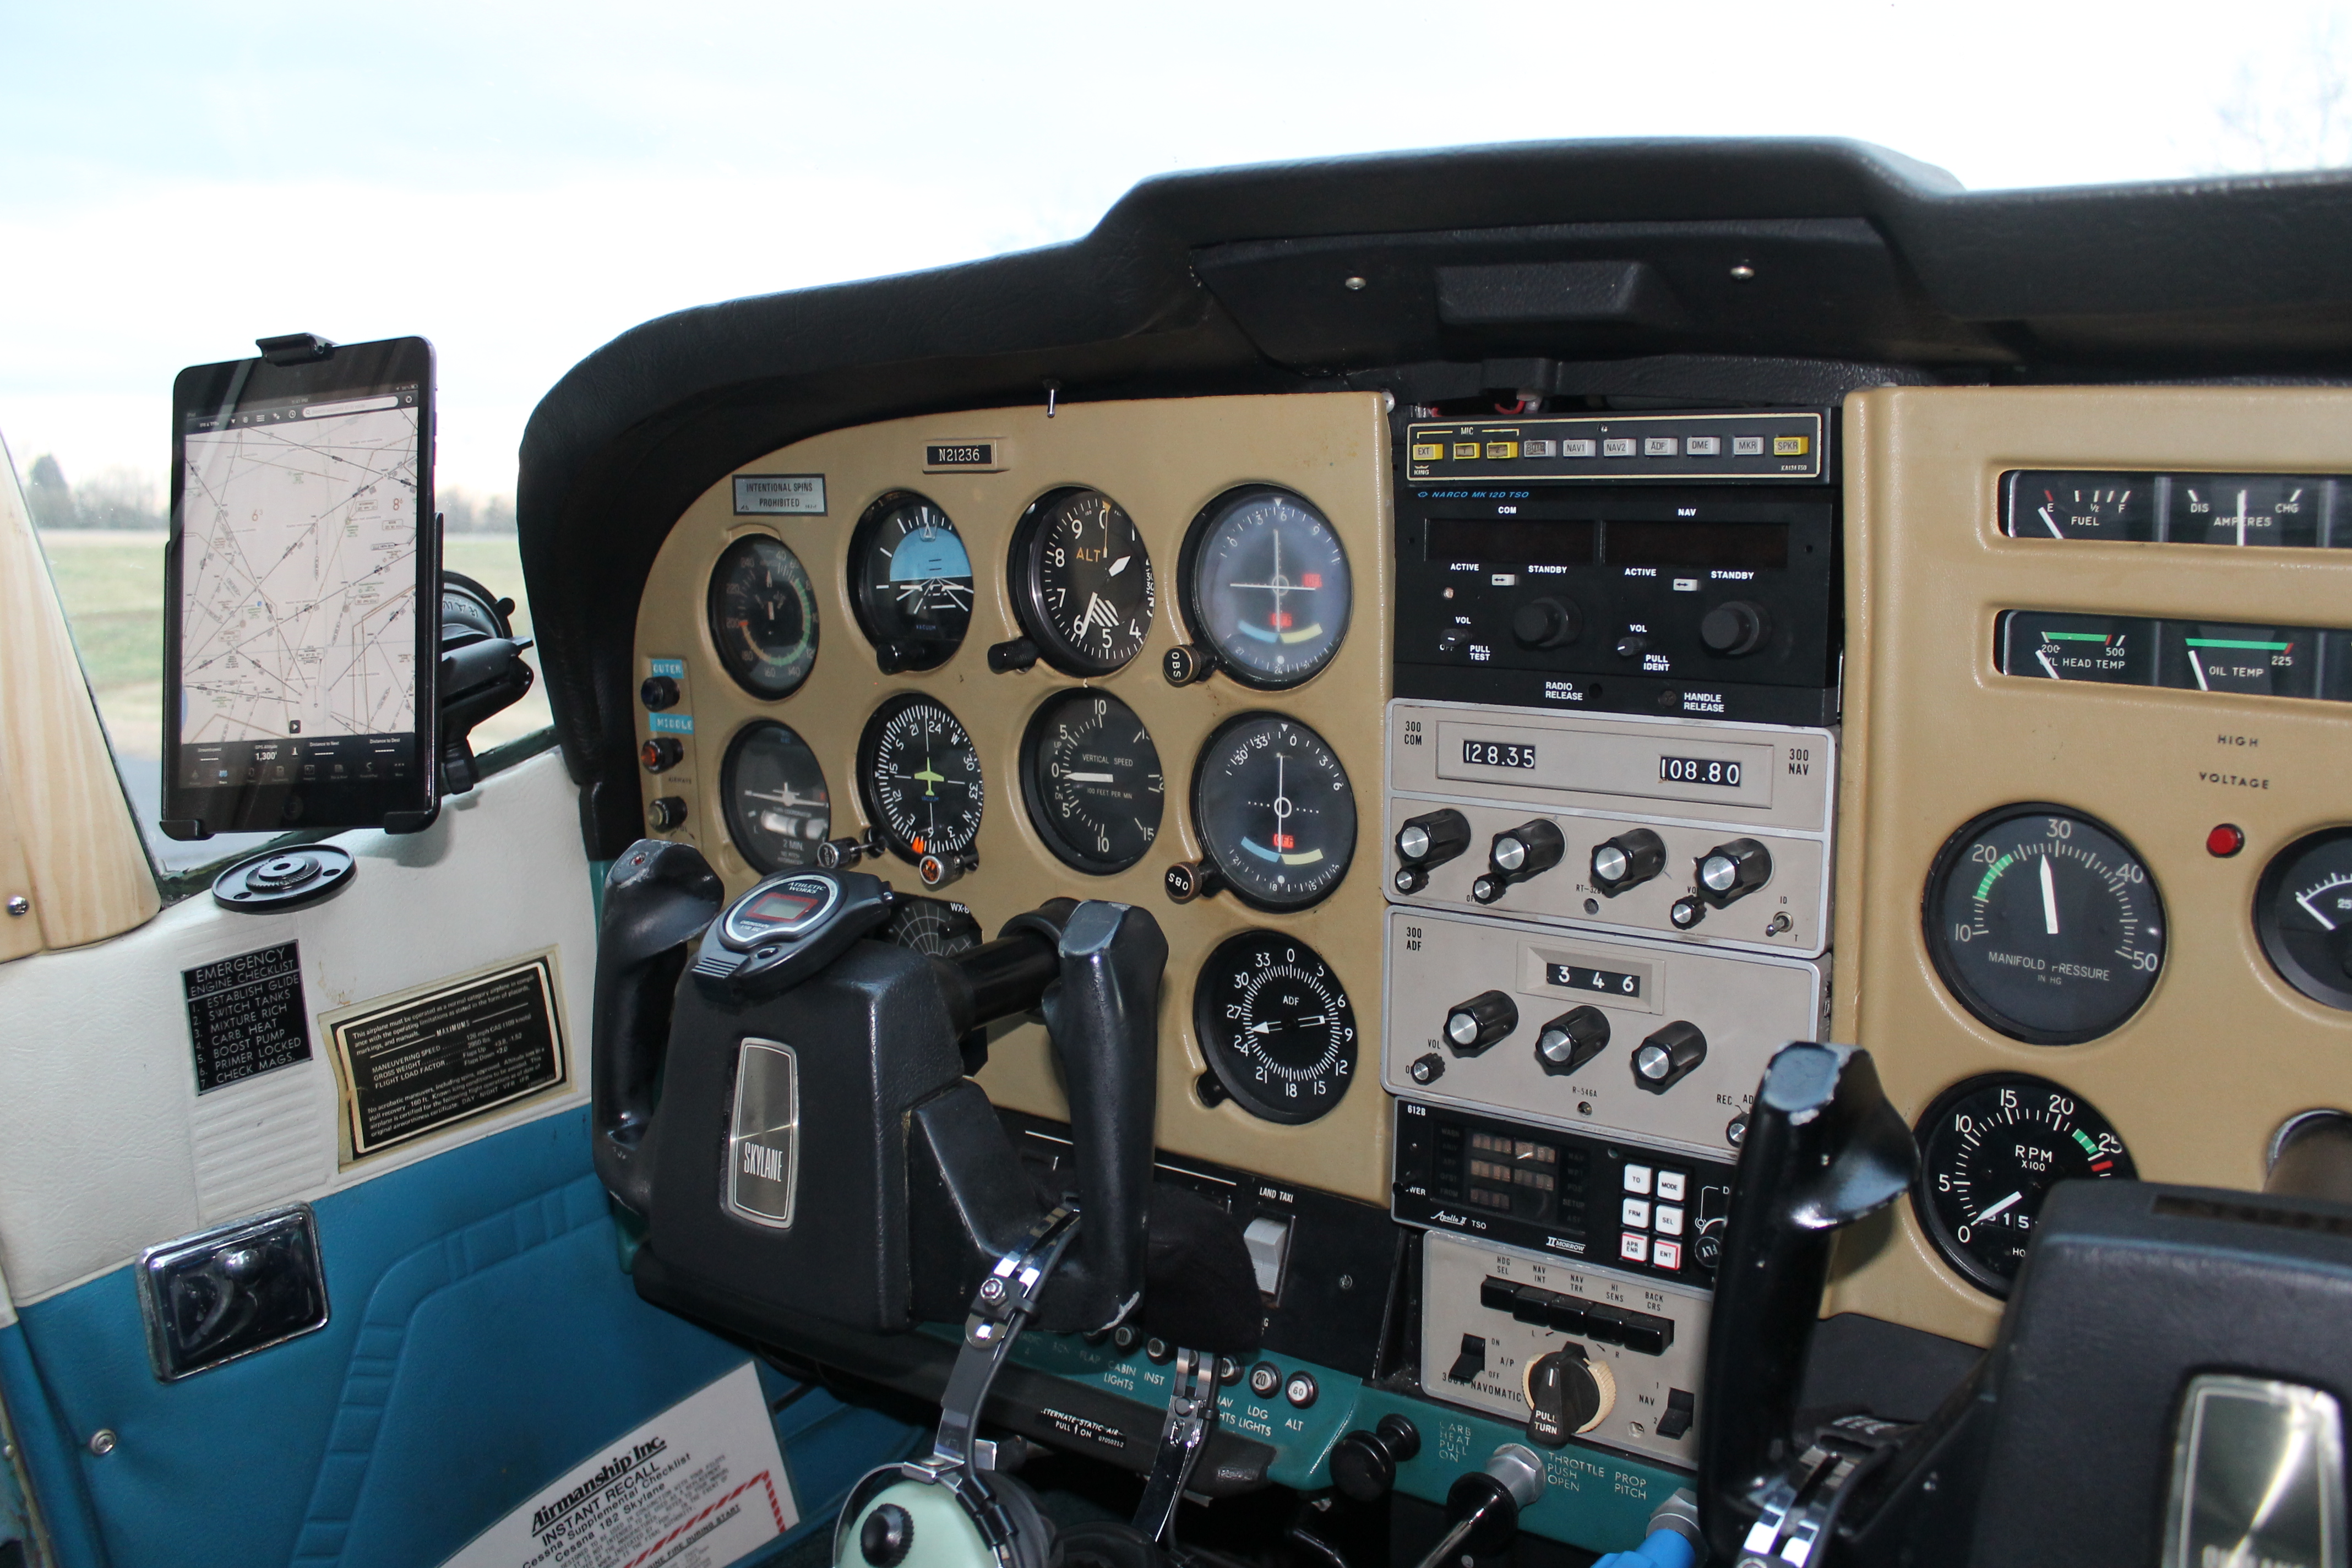 Cessna 182 Cockpit